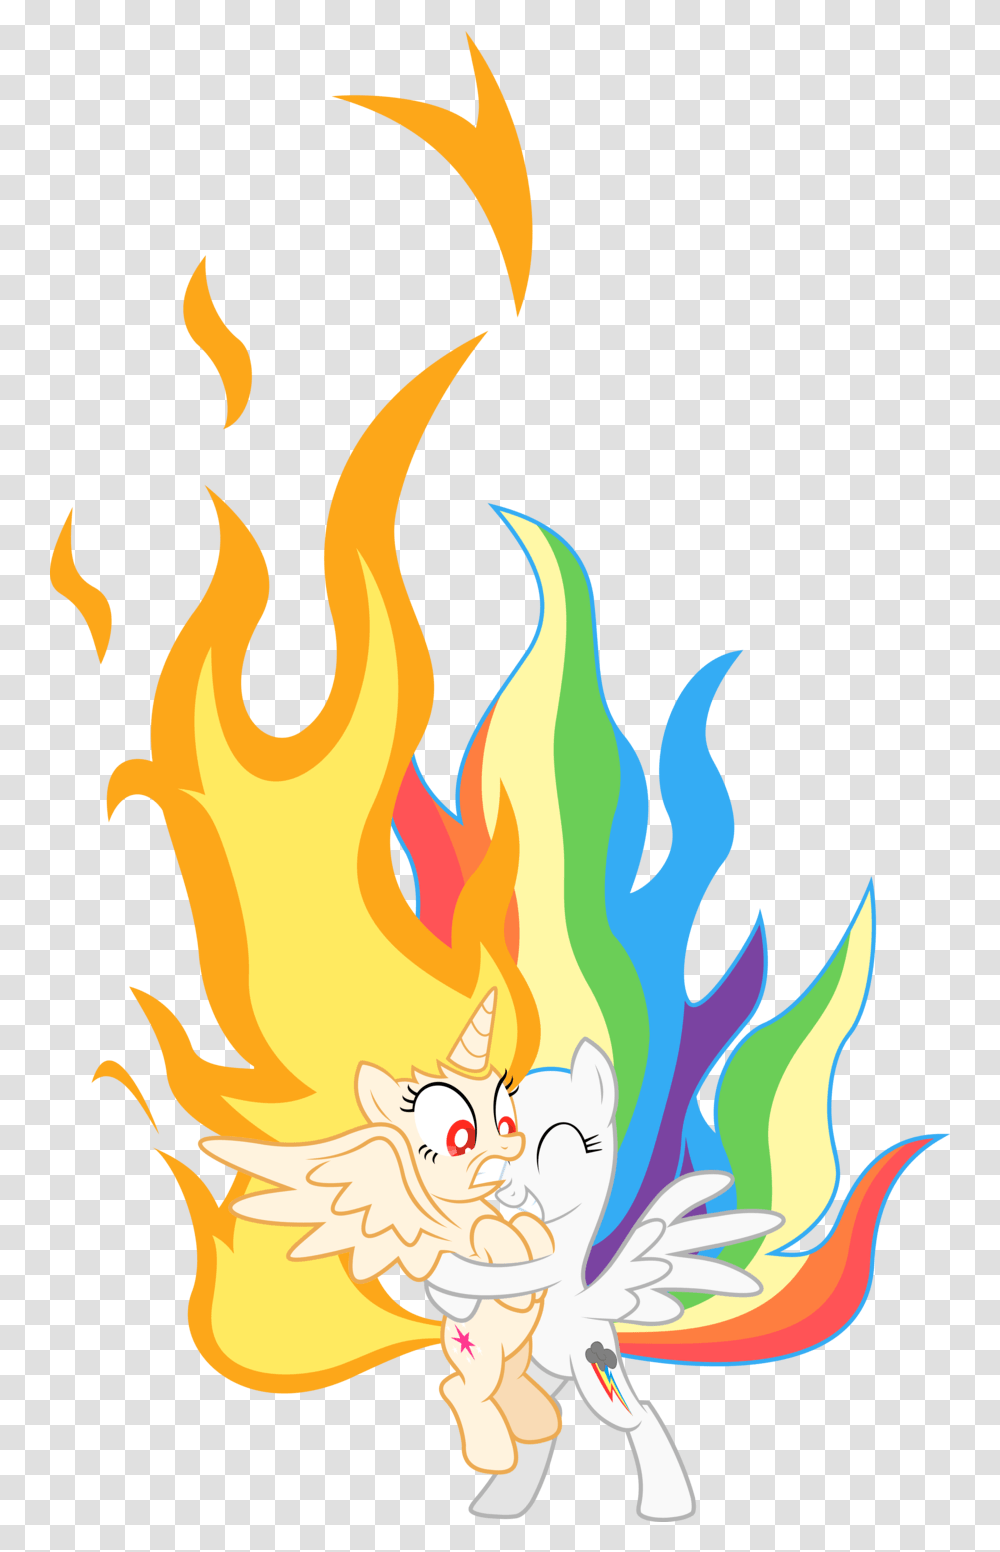 Fire Vector Princess Rainbow Dash, Flame, Bonfire Transparent Png